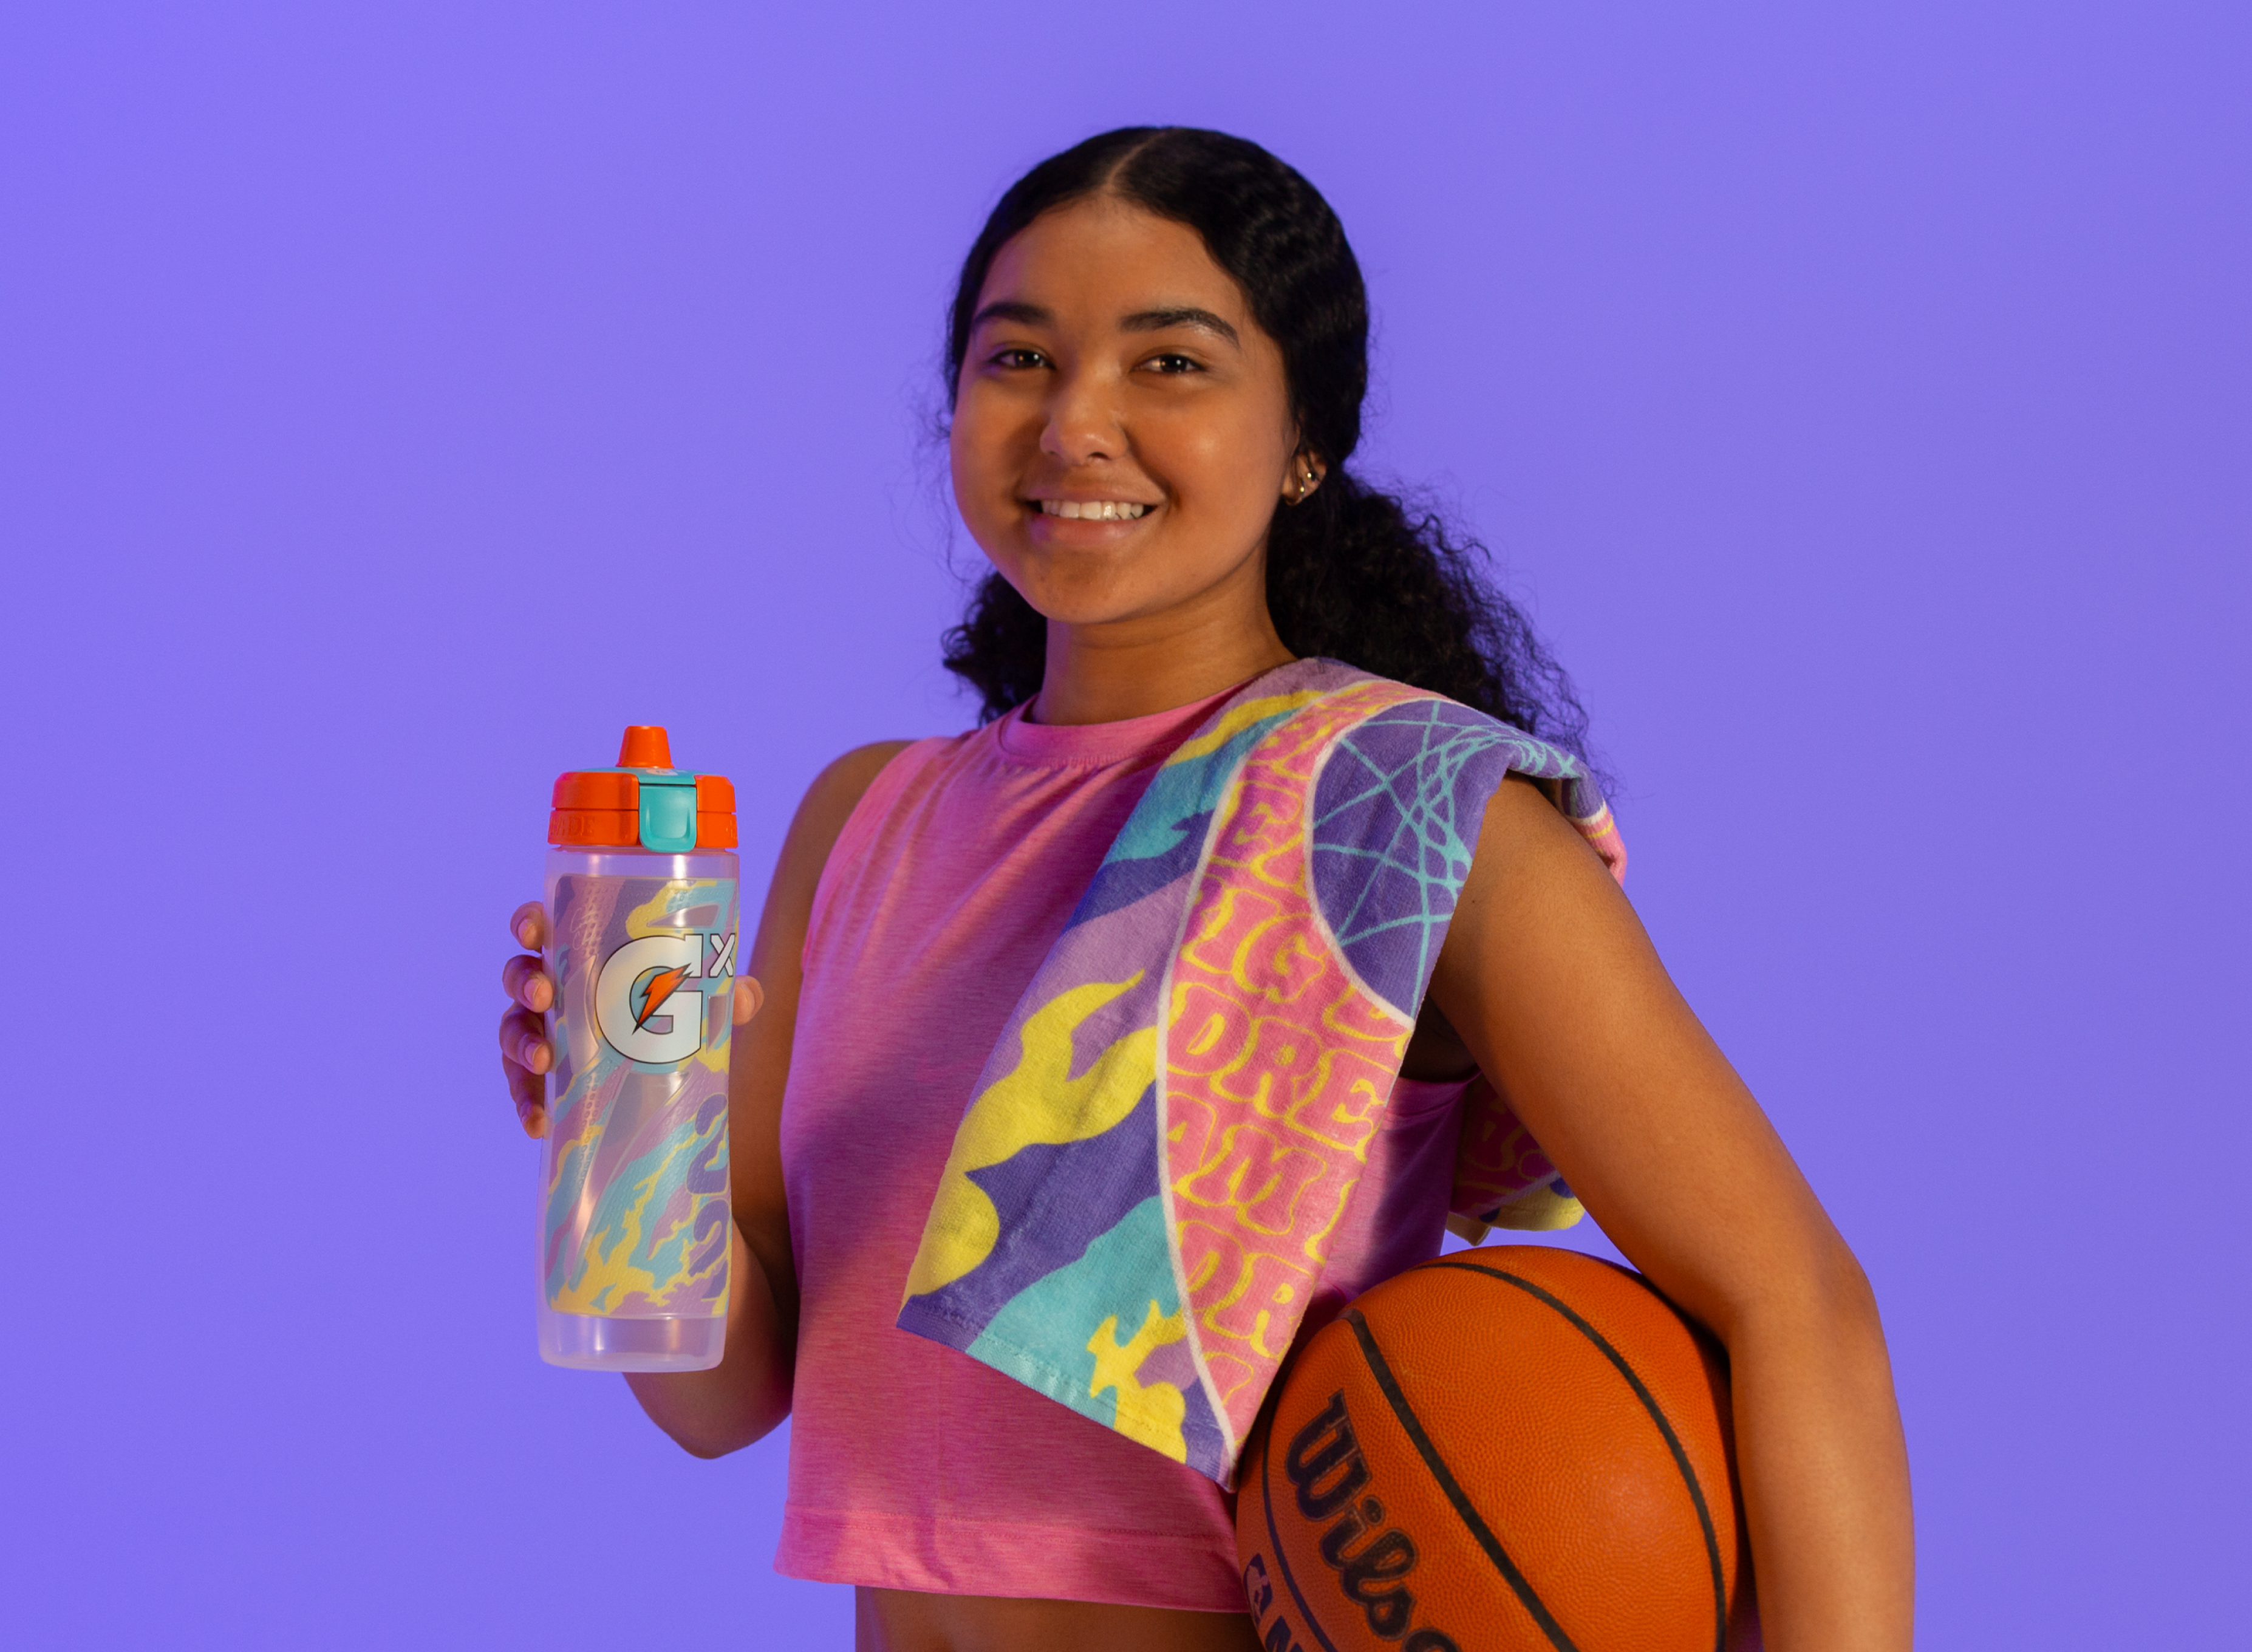 Athlete holding Caitlin Clark bottle, towel and basketball